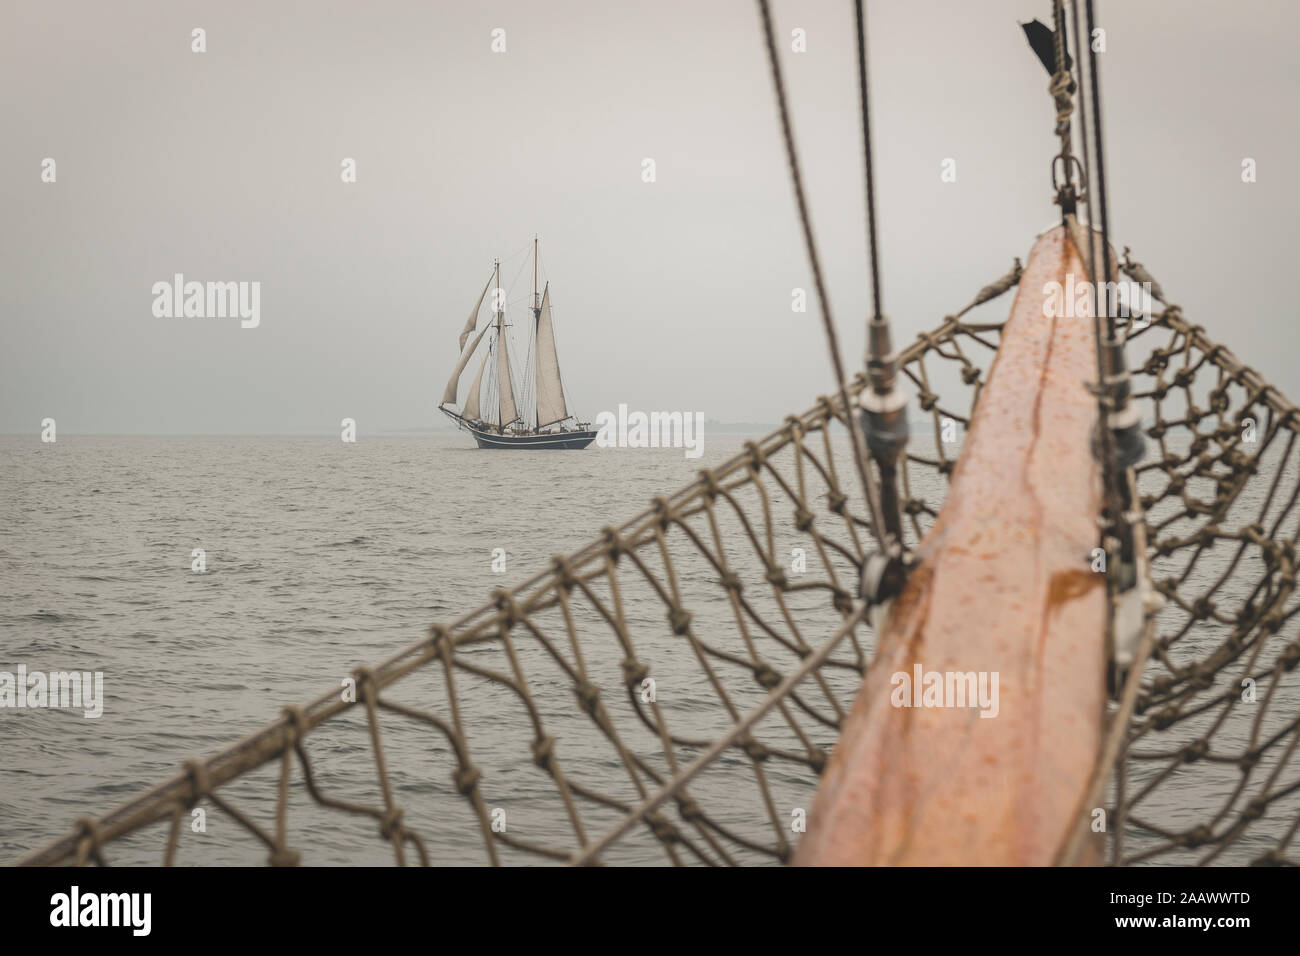 Denmark, Baltic Sea, Sailing ship seen from gaff schooner bowsprit Stock Photo